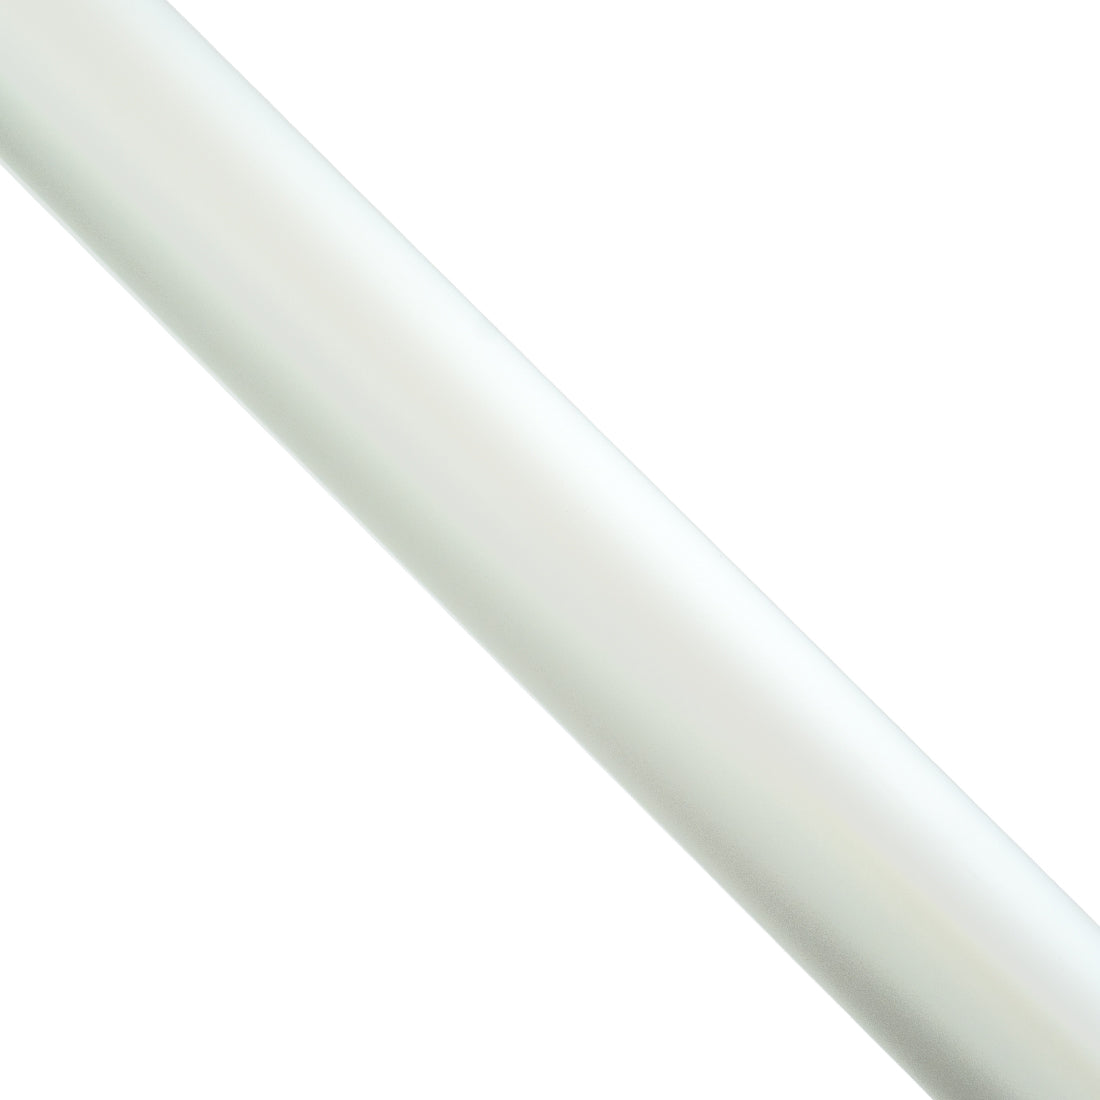 Unger nLite Aluminum Extension Pole - 10 Foot - Aluminum Detailed Close-Up View